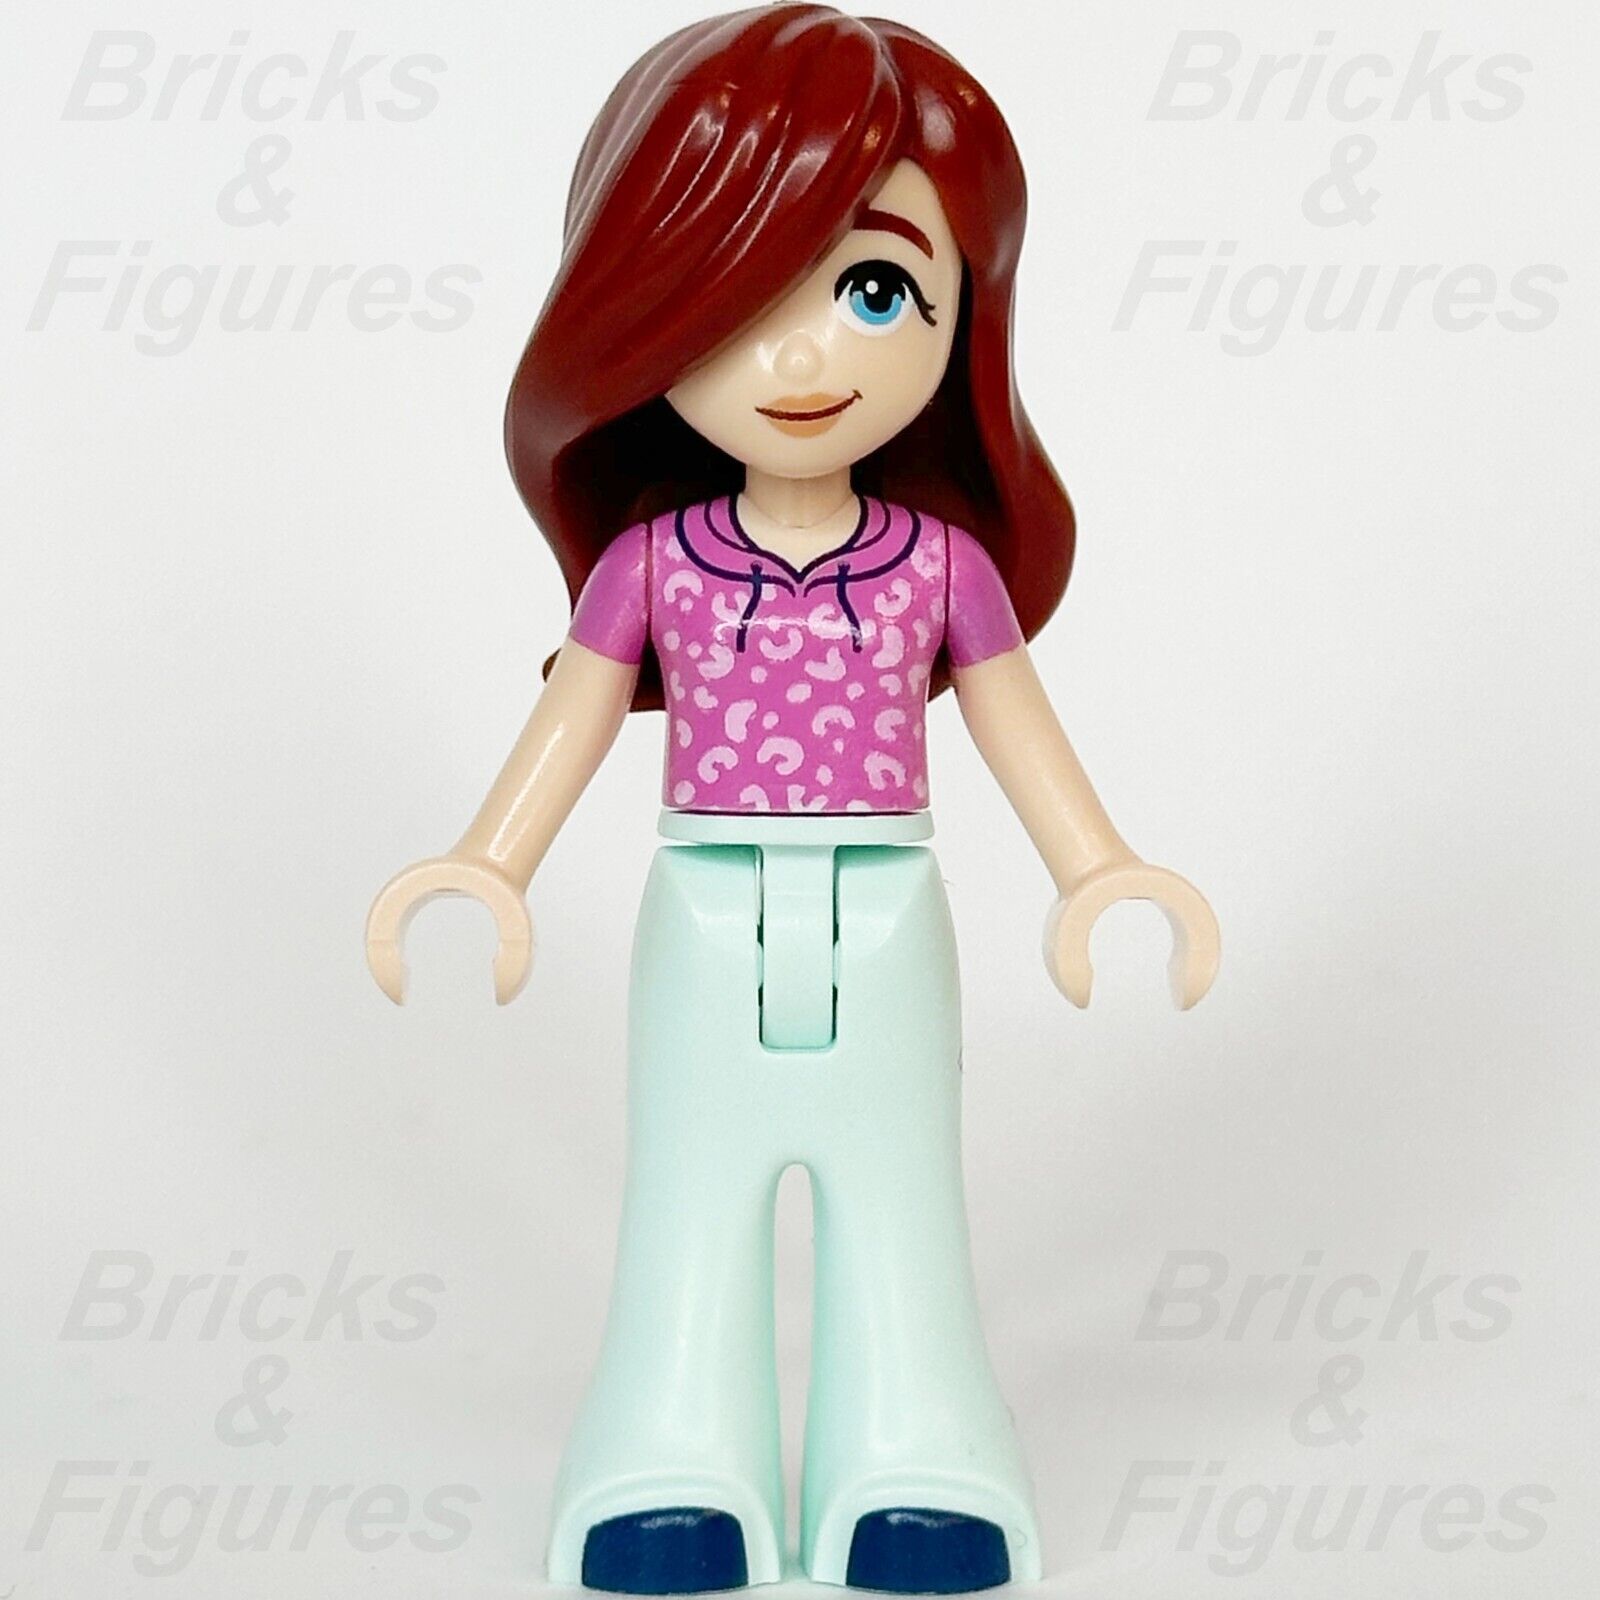 LEGO Friends Paisley Minifigure Pink Hoodie Blue Shoes Minifig 41735 frnd582